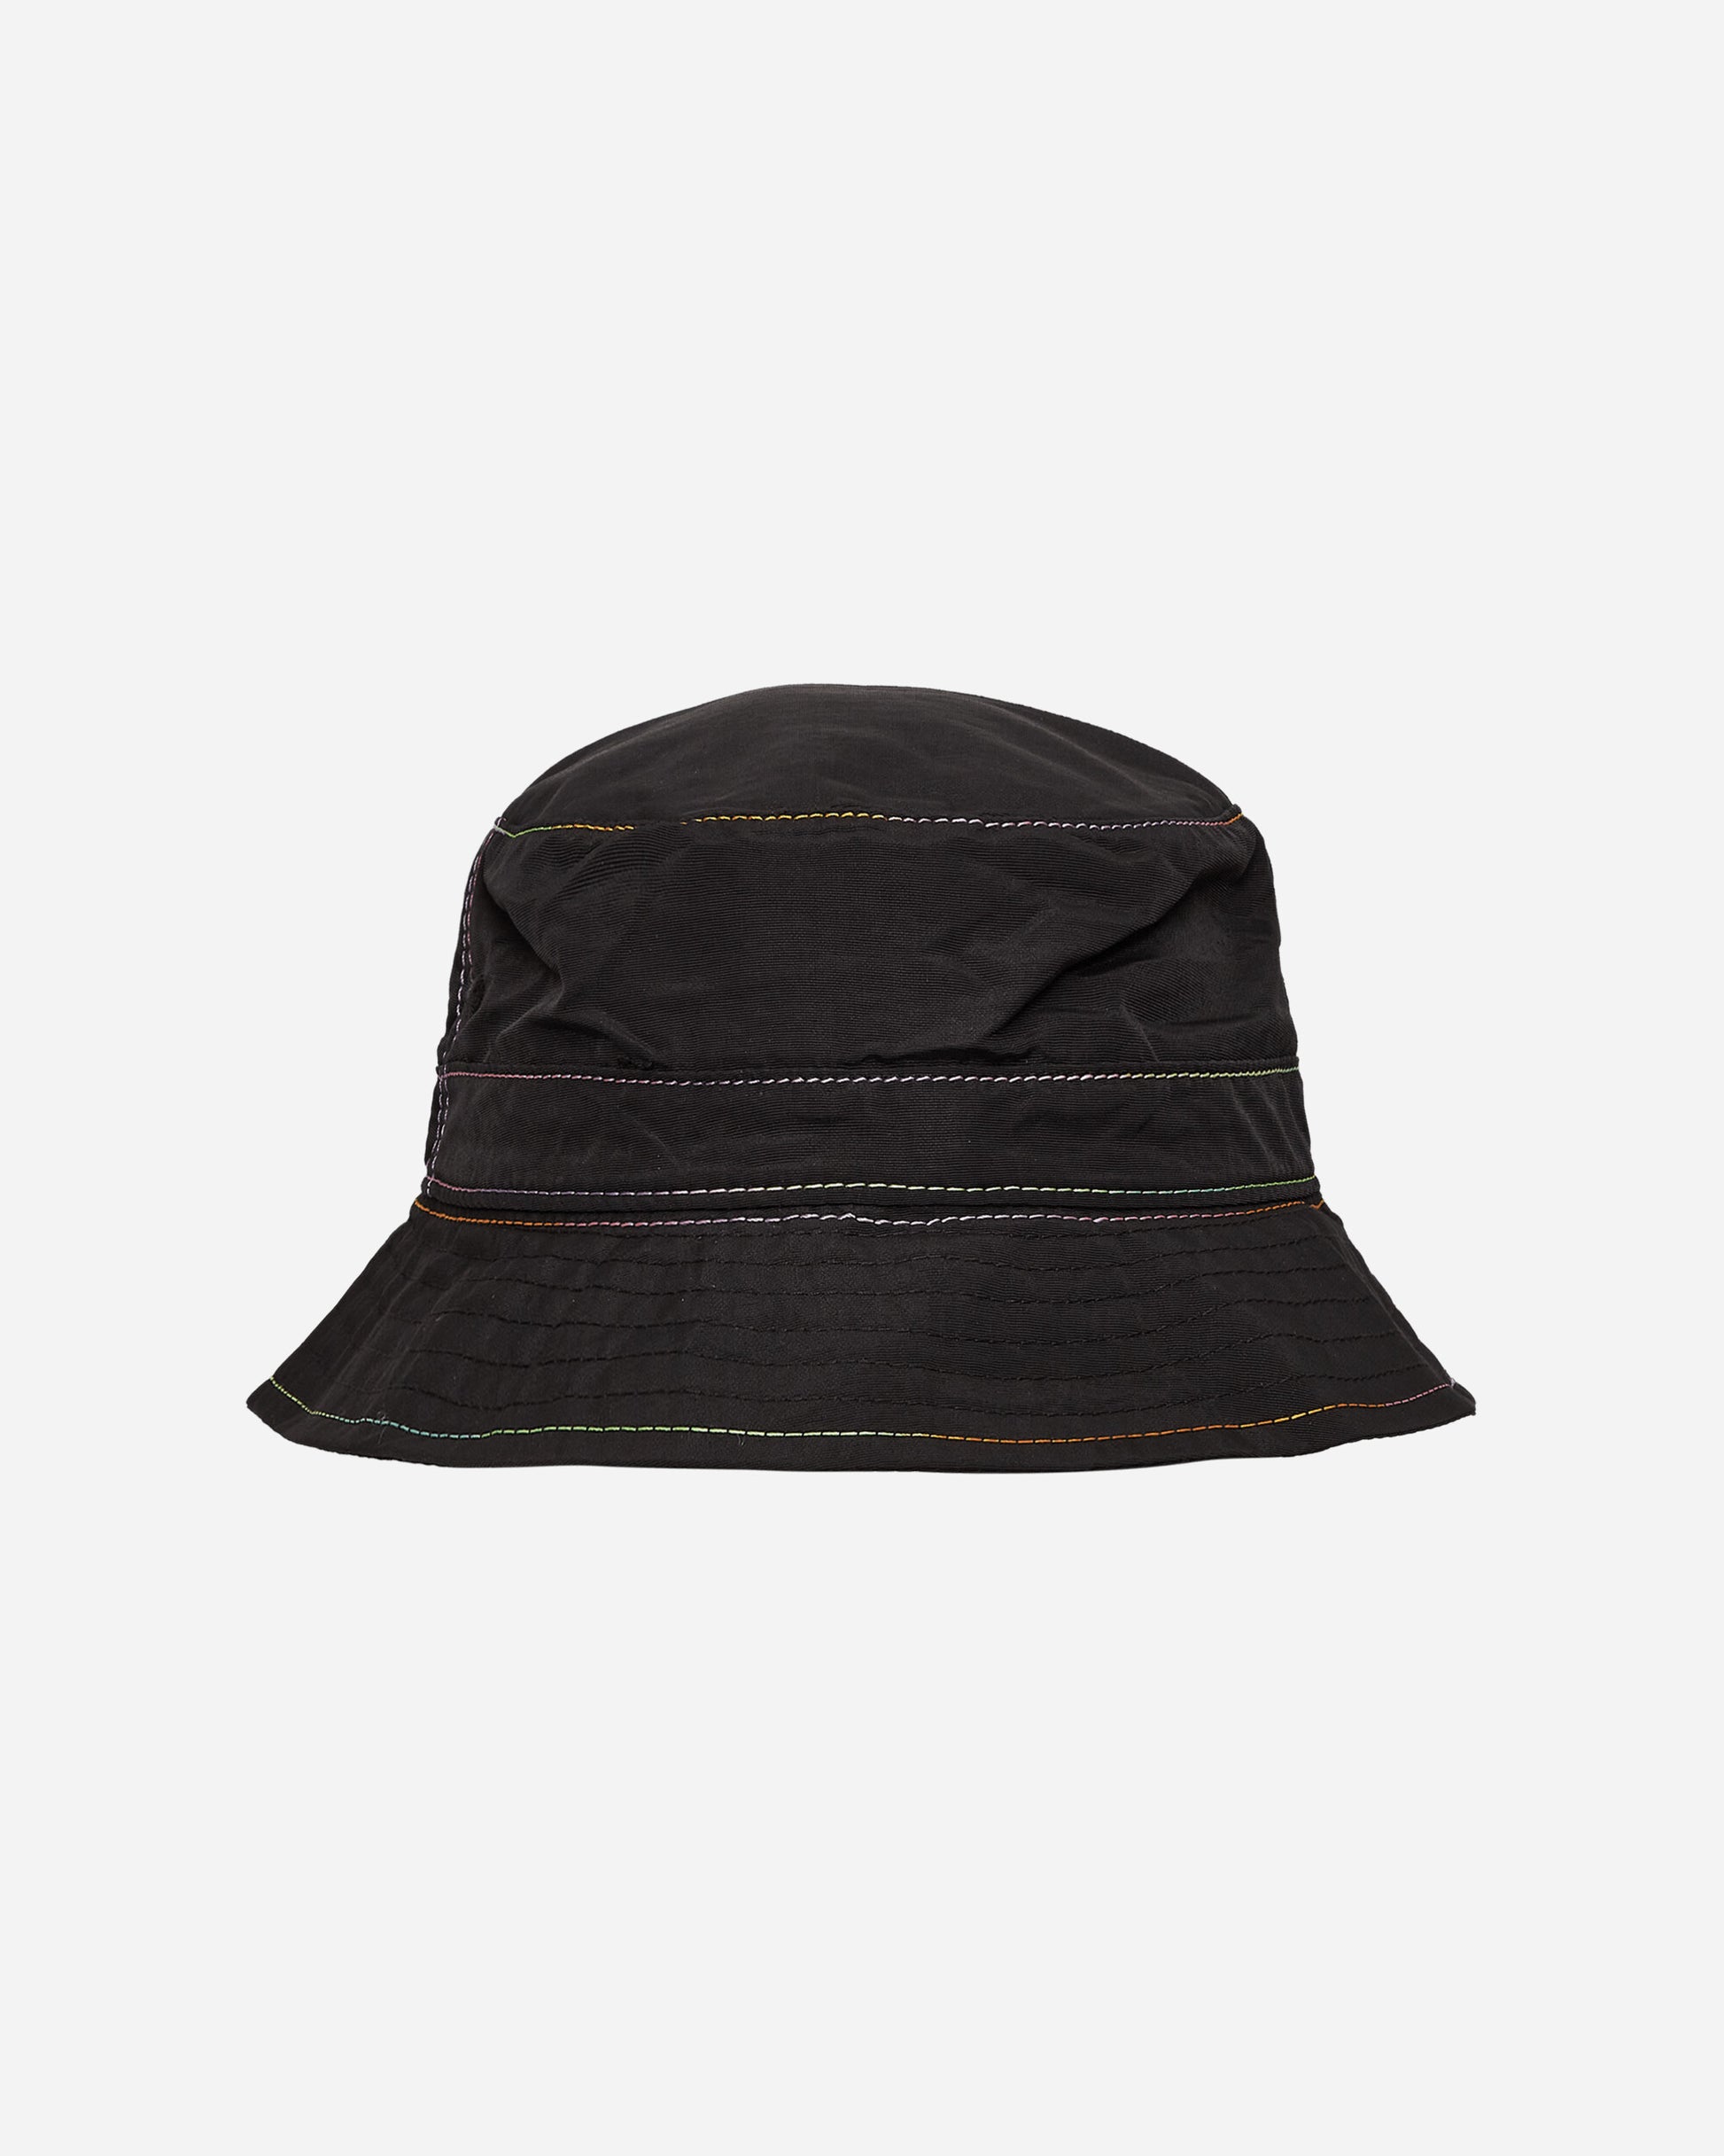 4 Worth Doing Gradient Stitch Nylon Bucket Black Hats Bucket 4WDSS23HT5 BLACK